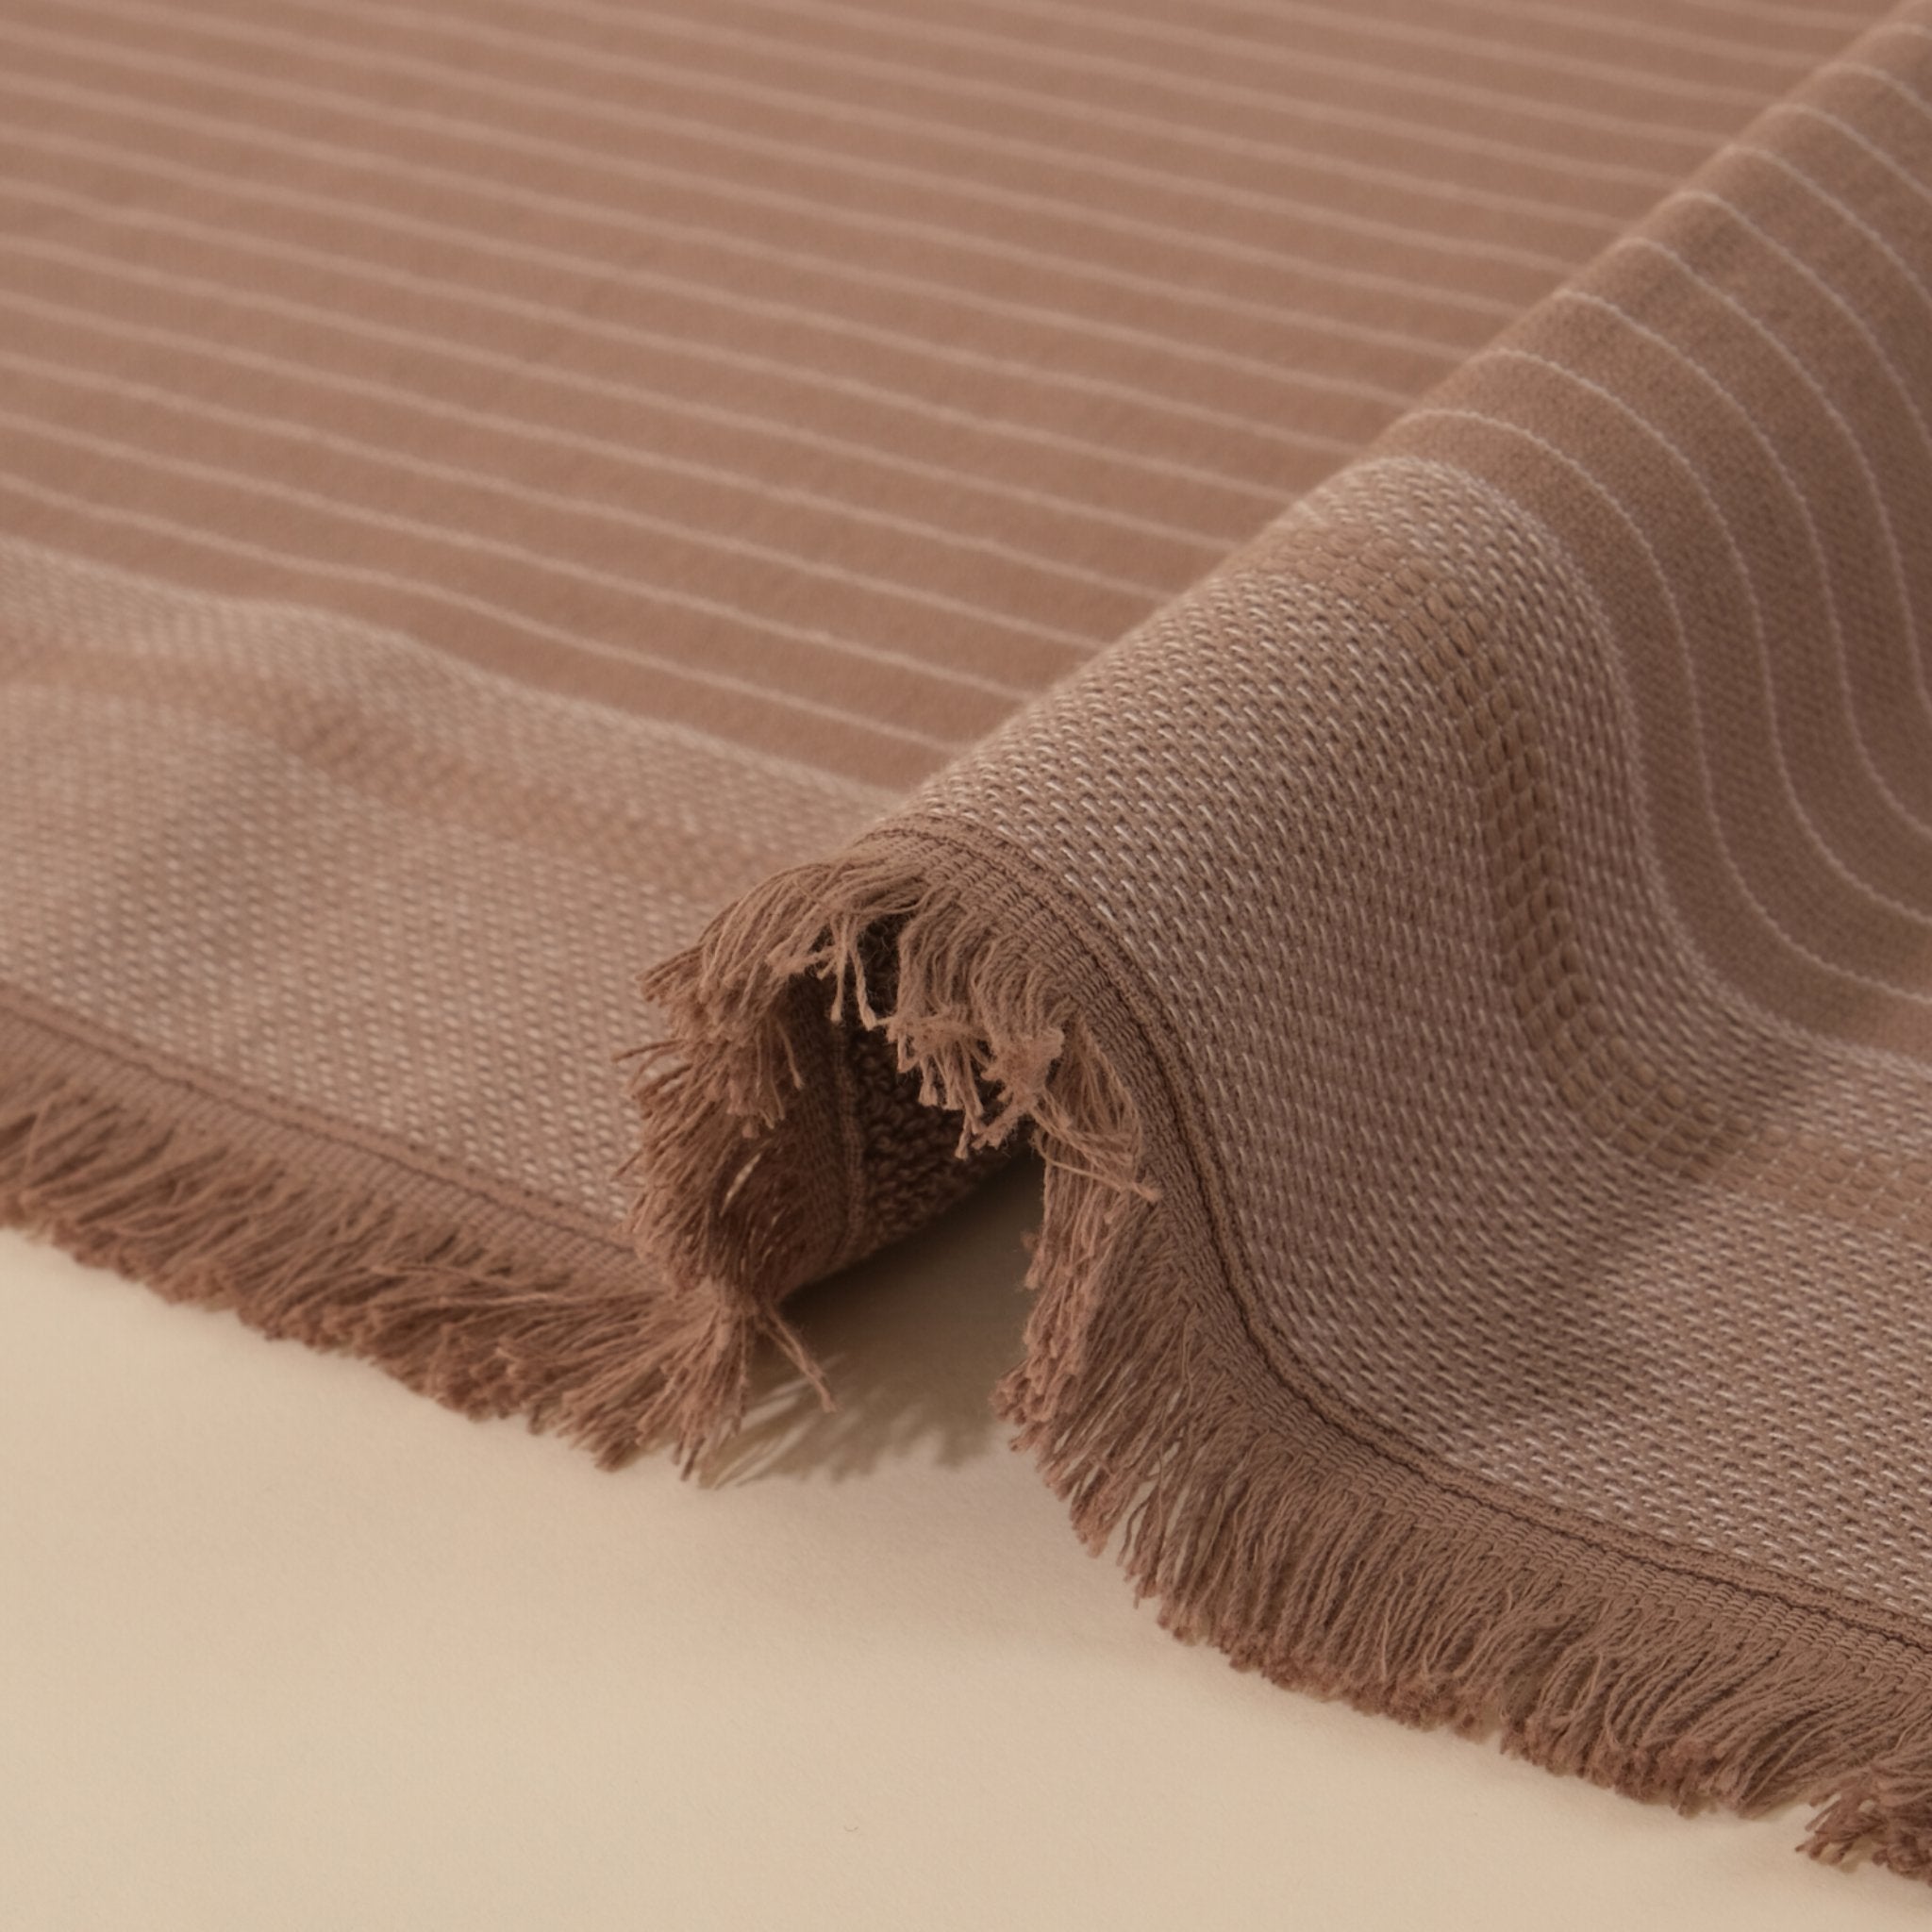 Simba Terry Towel - Sand Beige - Terry Towel